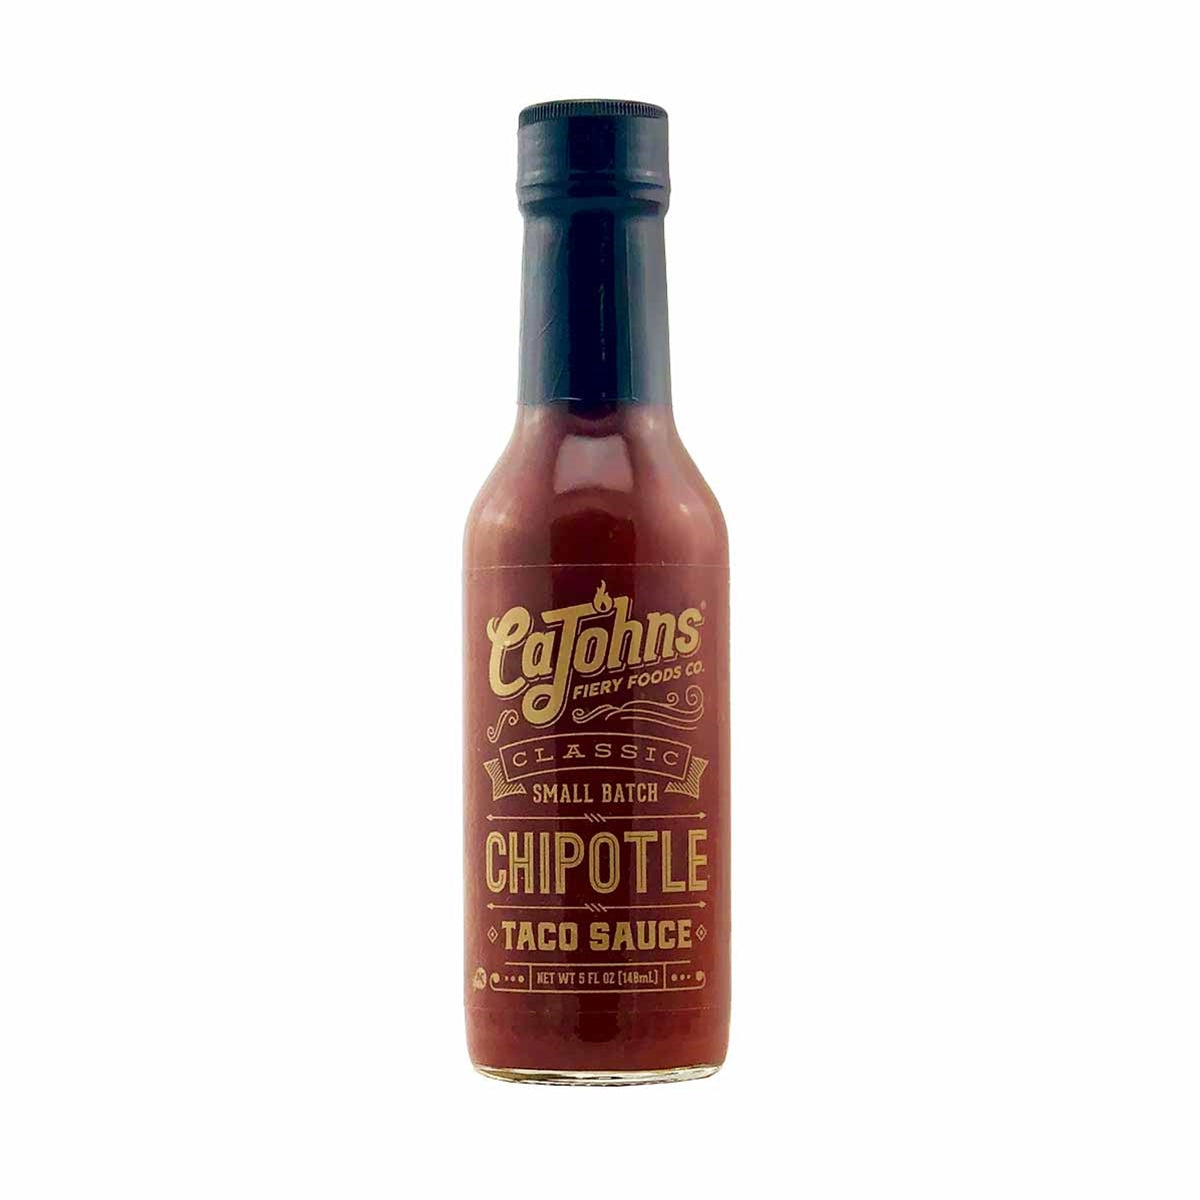 Cajohn's Classic Chipotle Taco Sauce